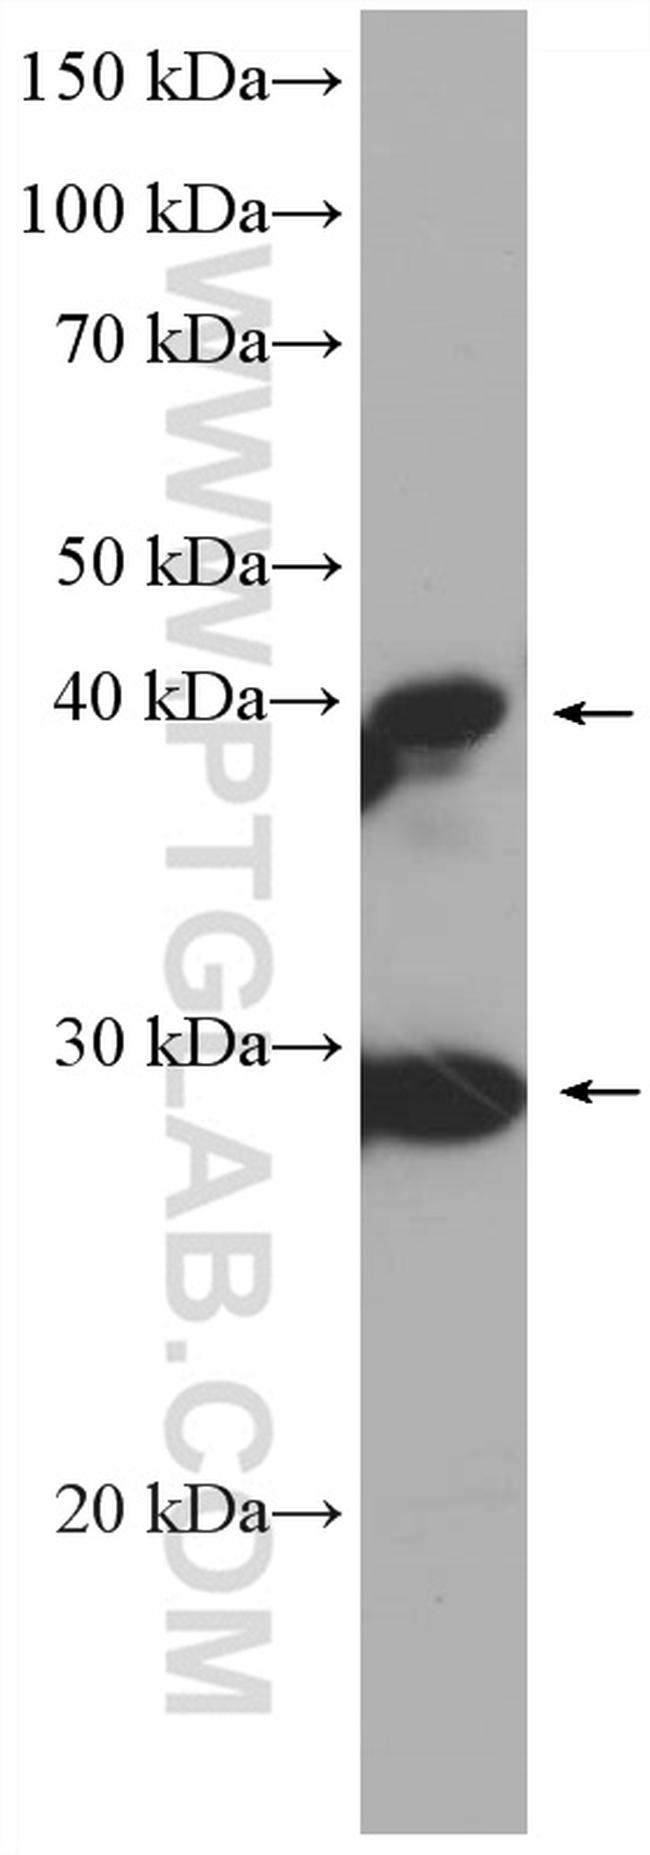 DNAJB6 Antibody in Western Blot (WB)